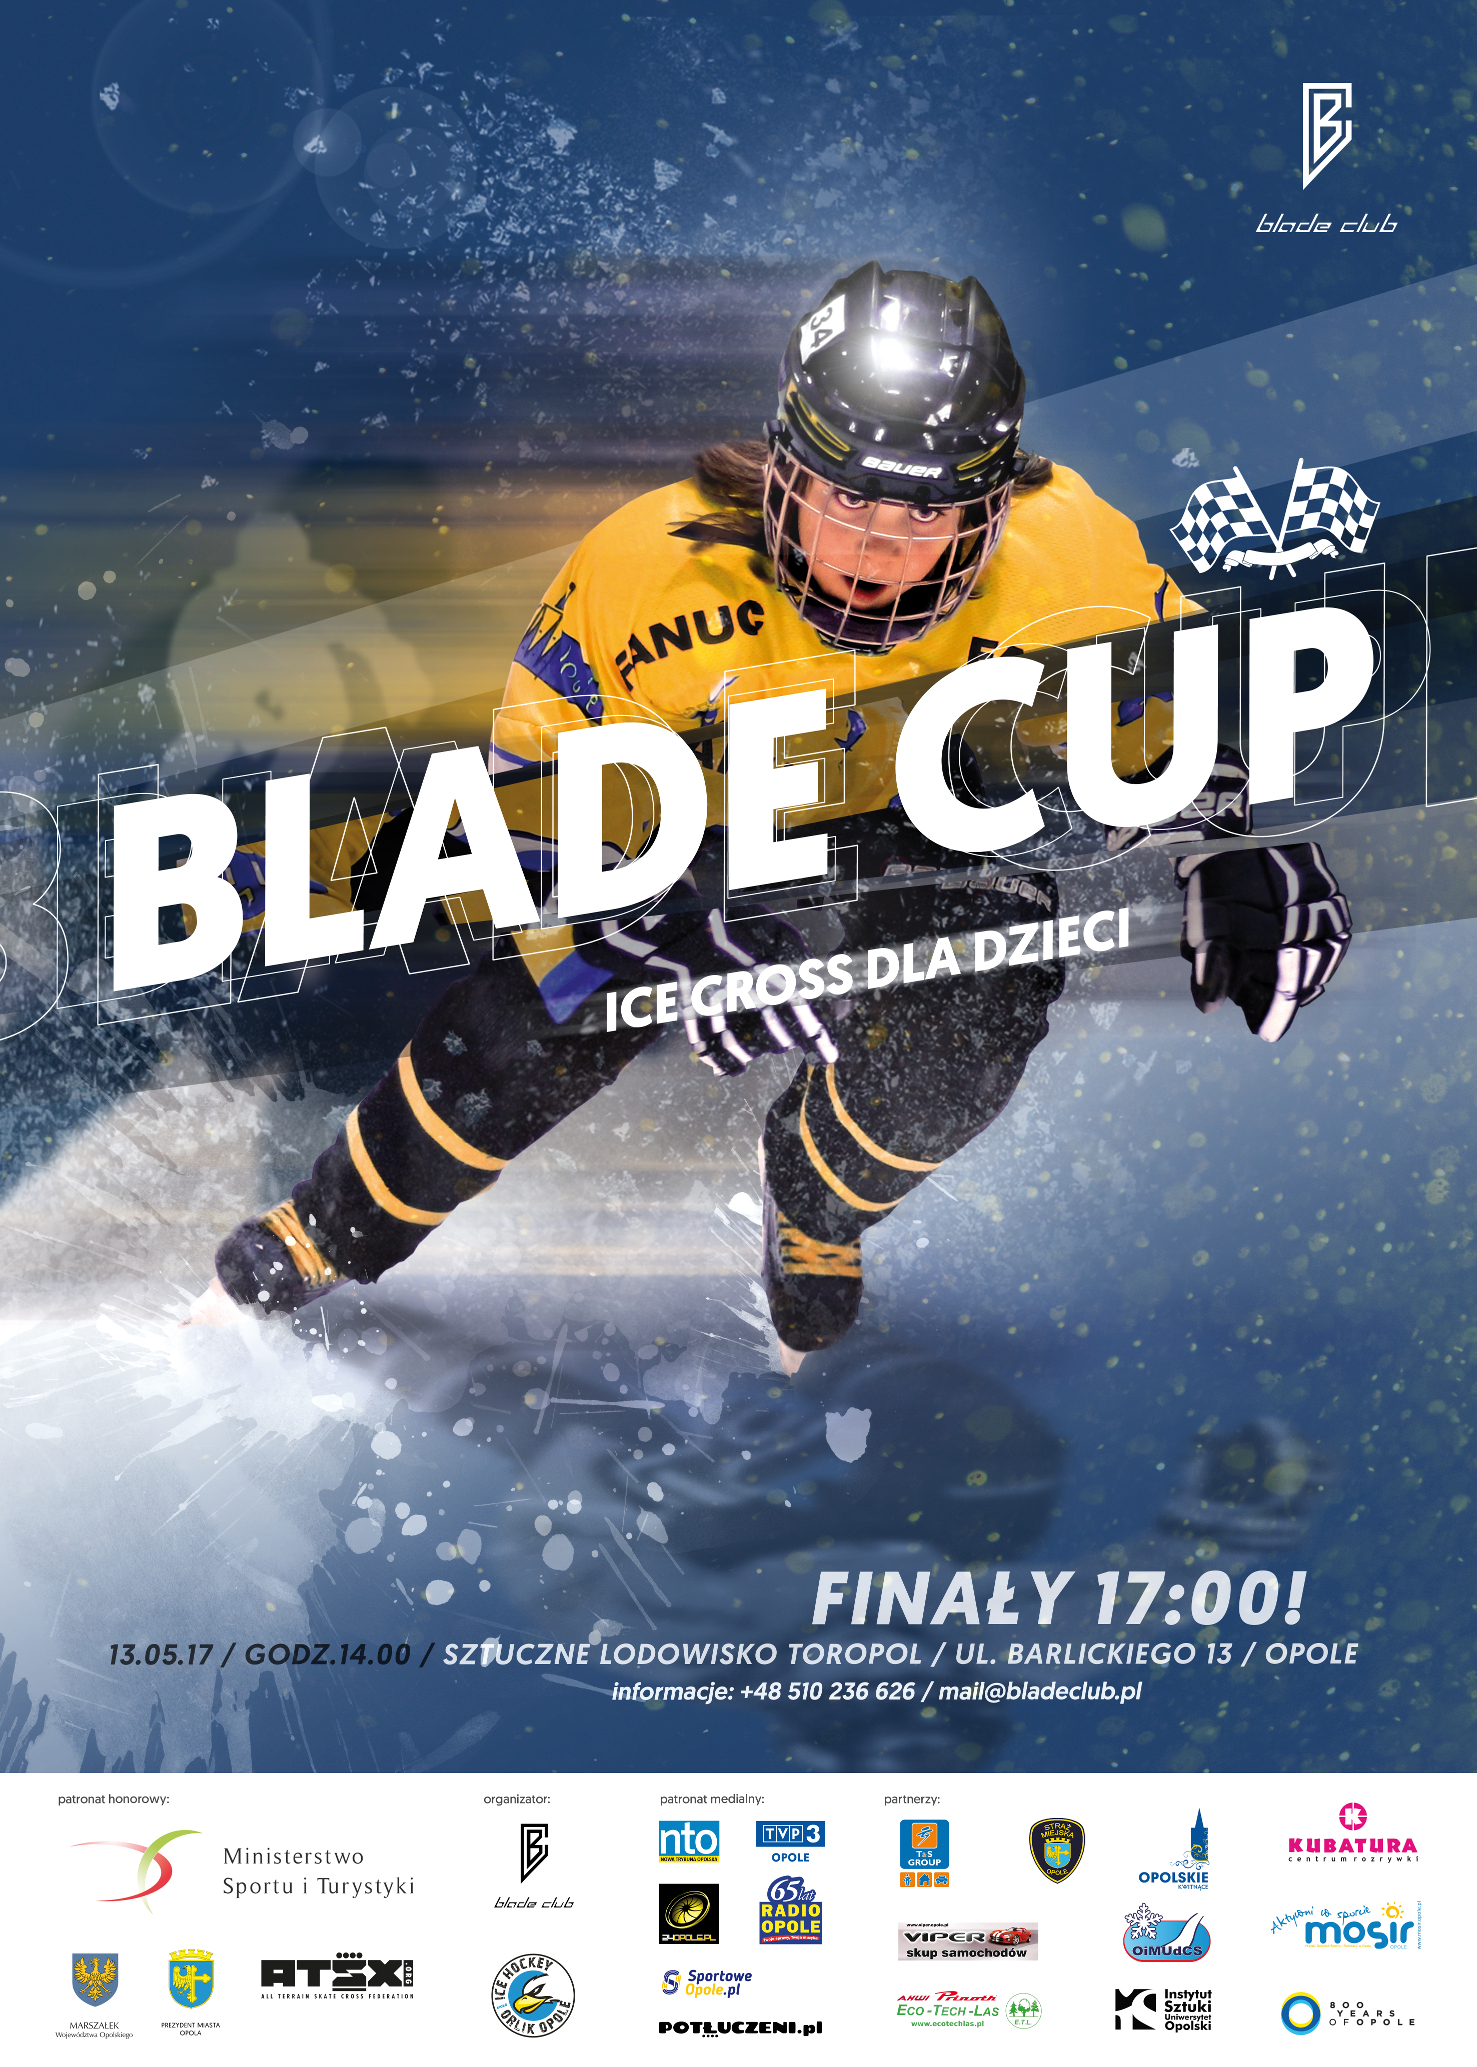 Plakat Blade Cup. Ice Cross dla dzieci [materiały organizatora]